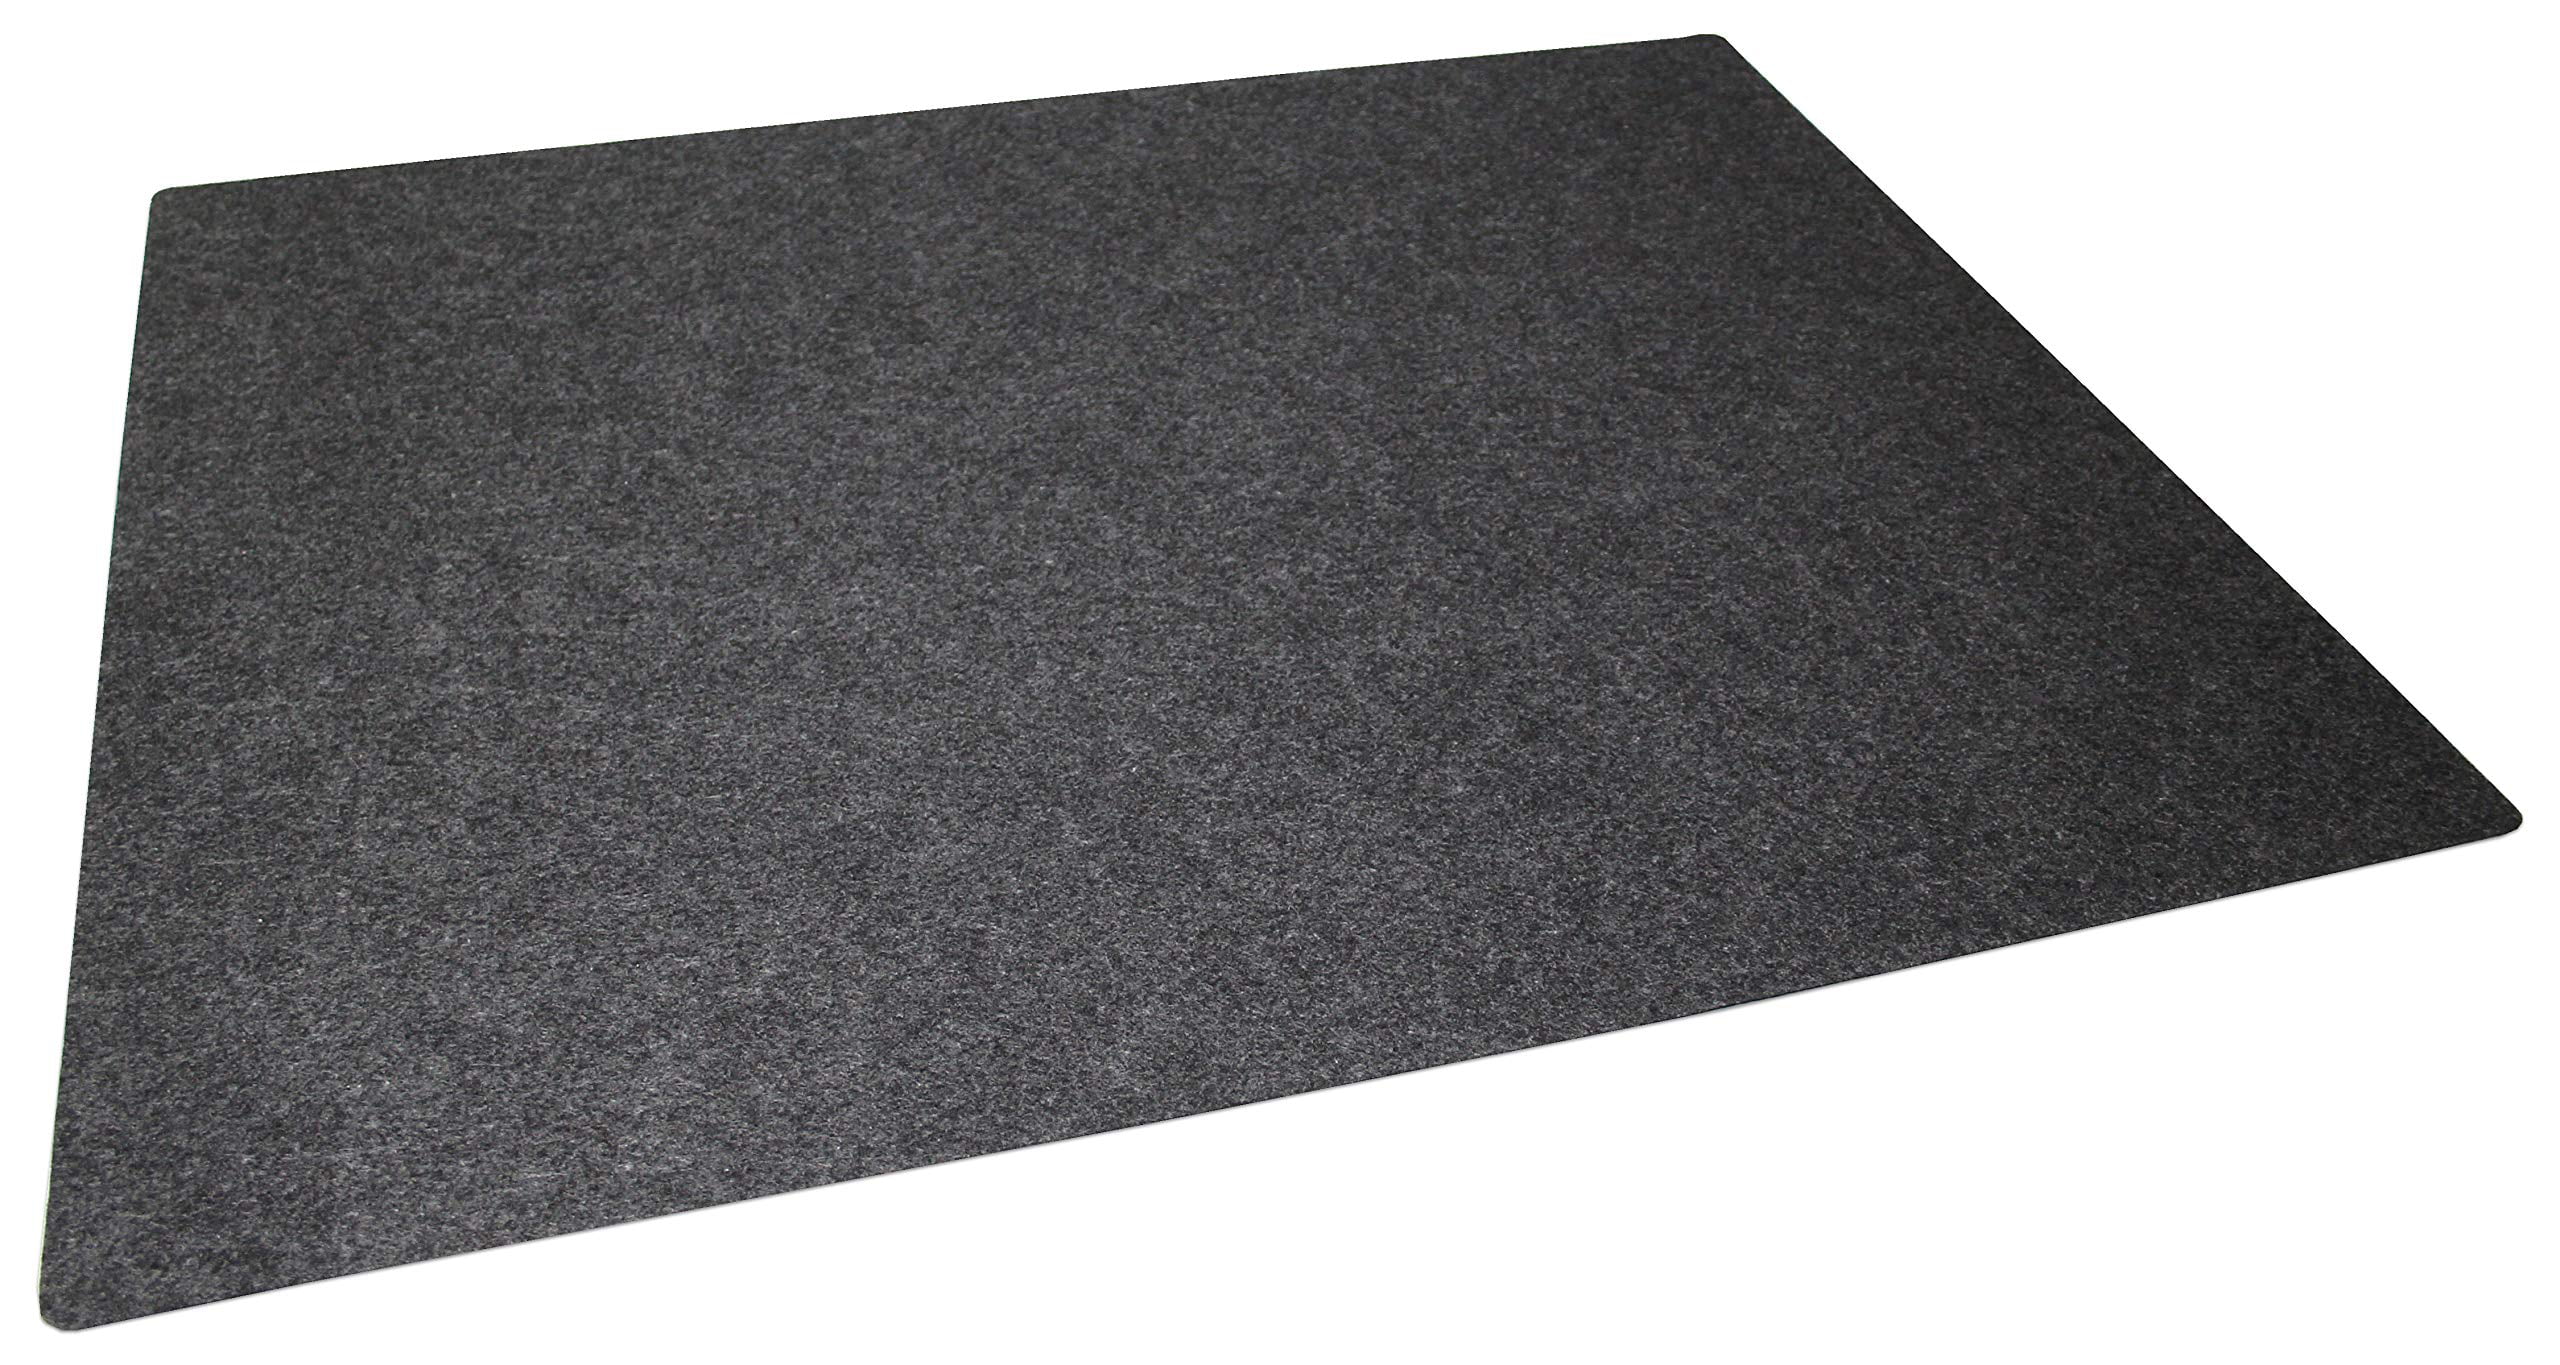 Drymate Oil Spill Mat, Premium Absorbent Pad Contains Liquids Reusable/Durable